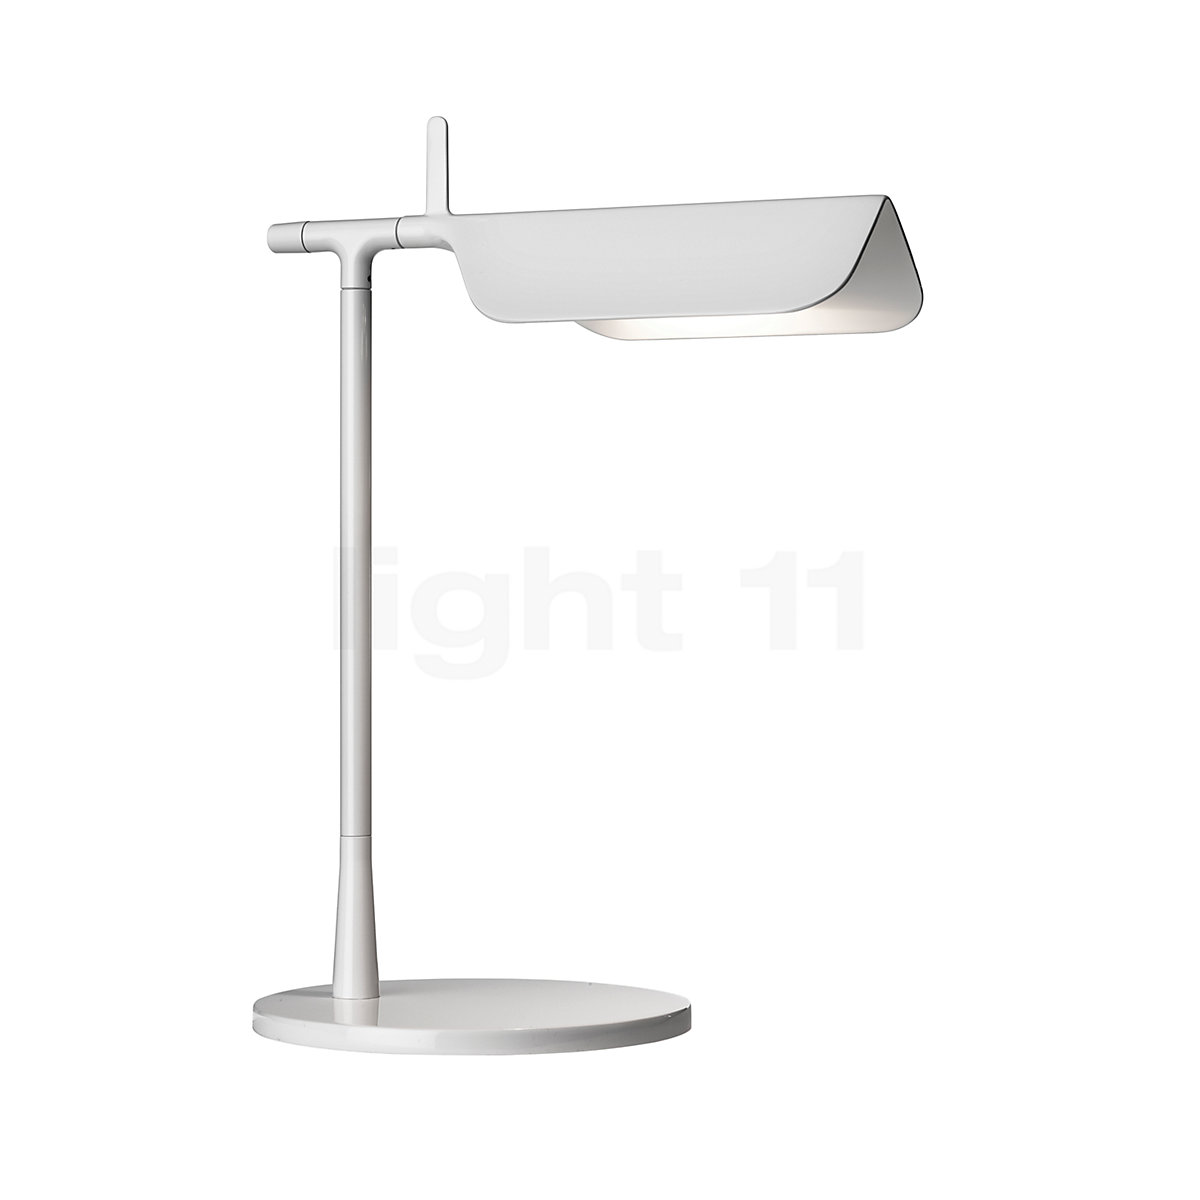 Flos Tab T Led At Light11 Eu, Halogen Desk Lamp Repair